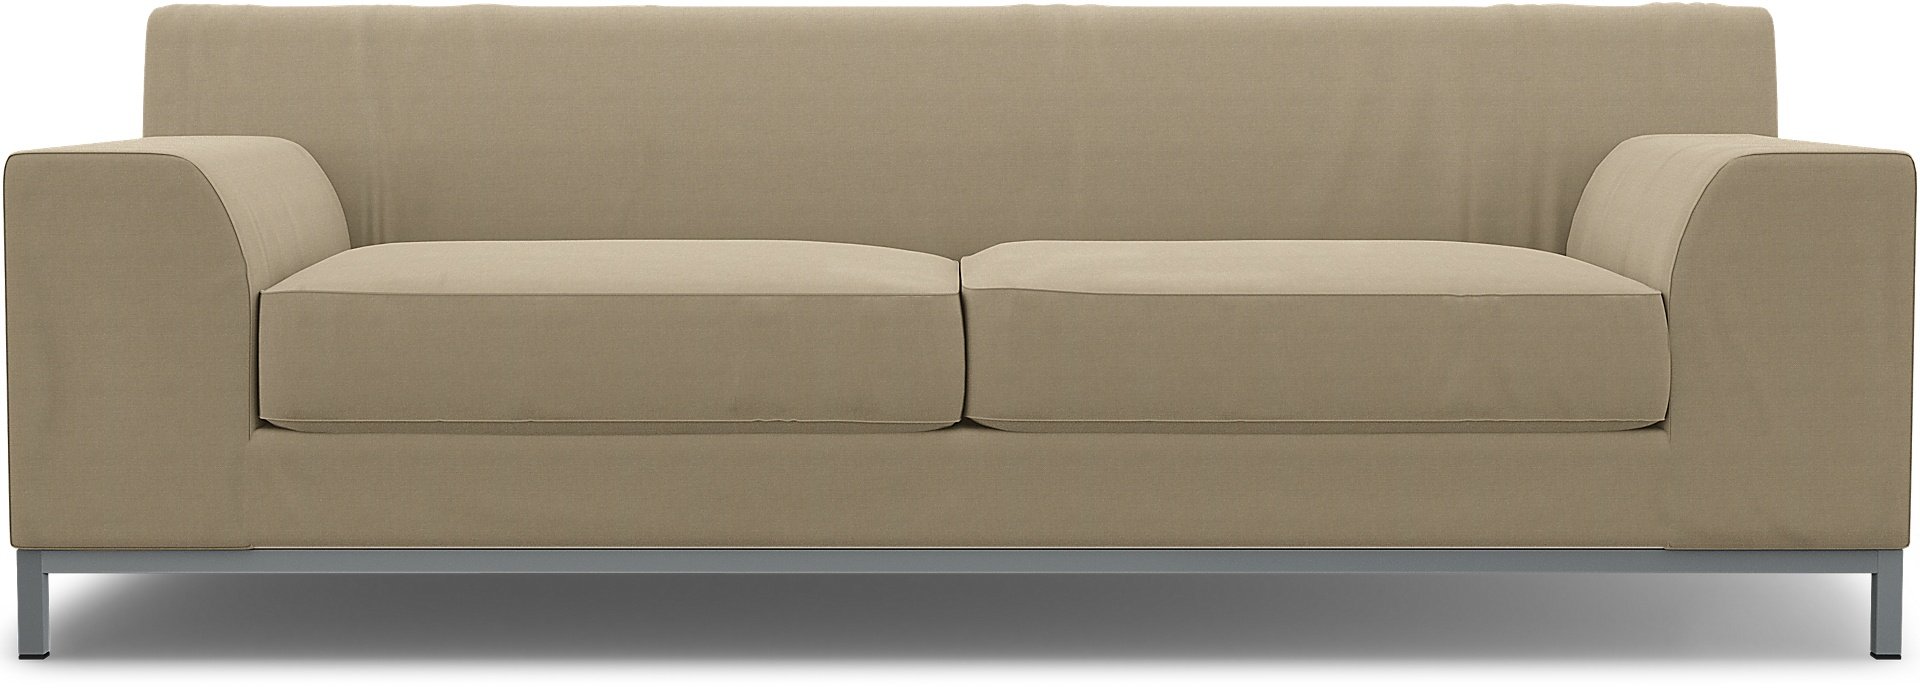 IKEA - Kramfors 3 Seater Sofa Cover, Tan, Linen - Bemz